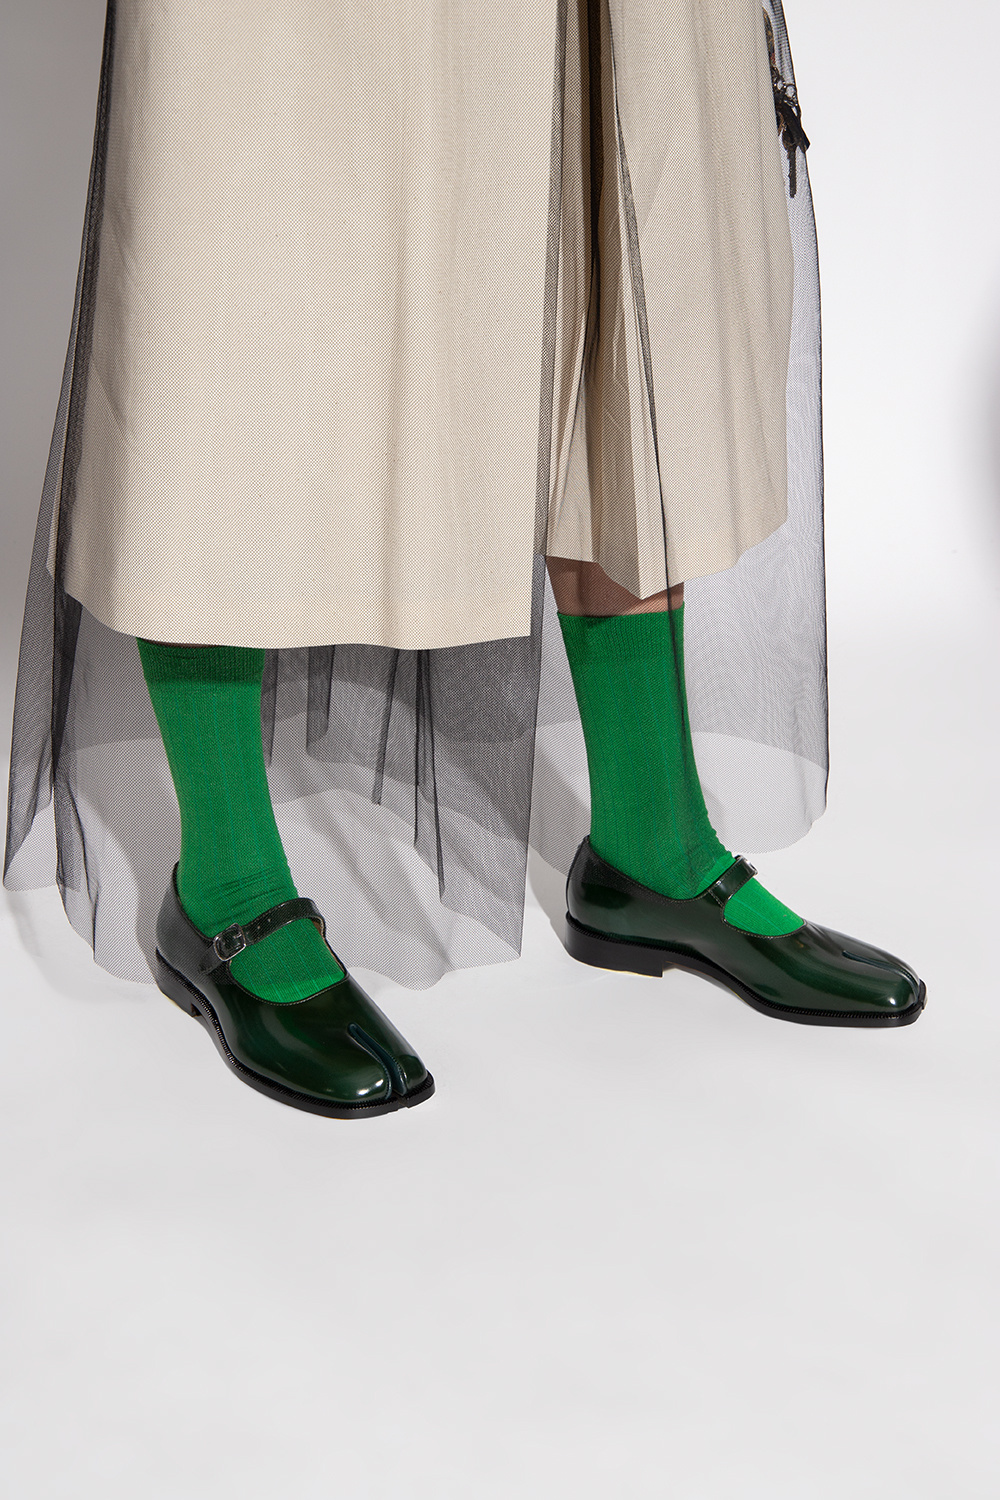 Green 'Mary-Jane' Tabi shoes Maison Margiela - Vitkac HK